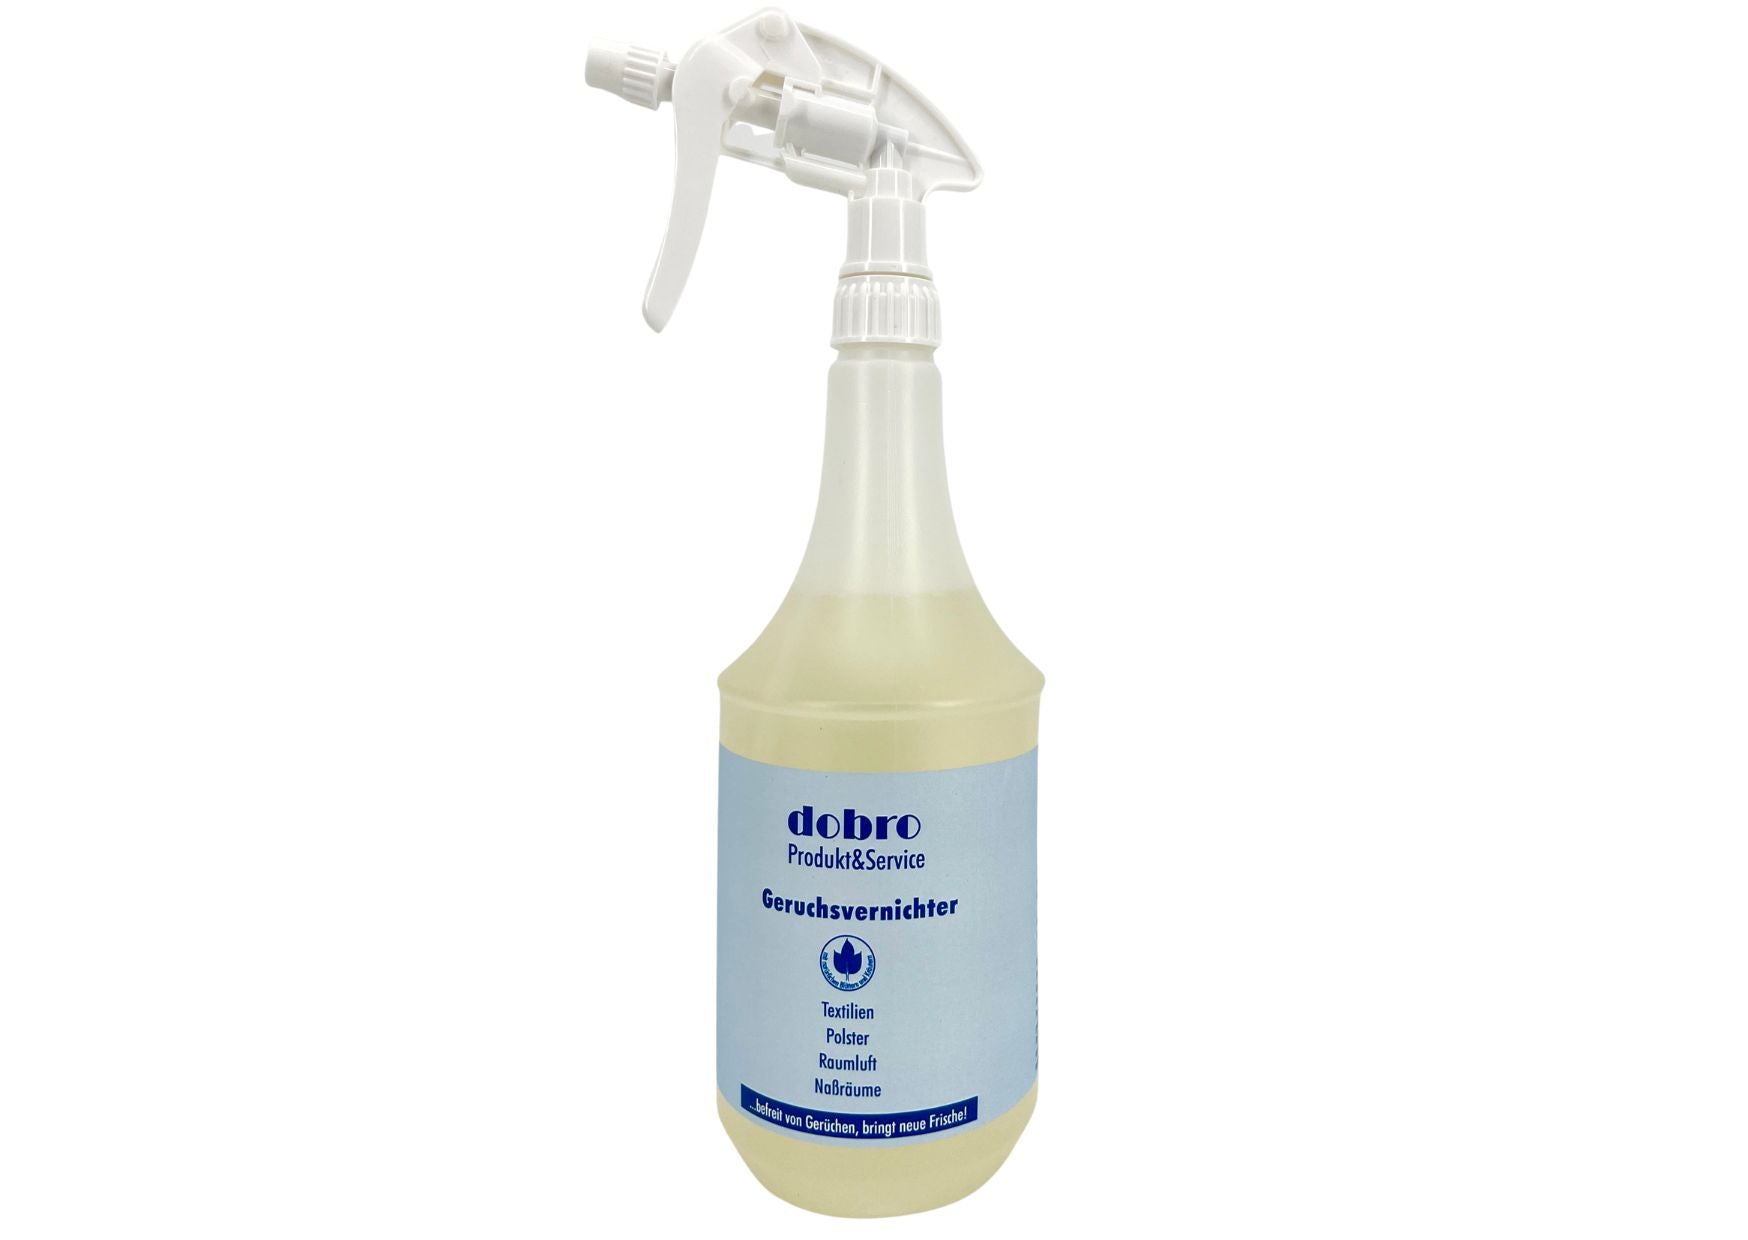 Dobro Fresh Nature odor eliminator spray bottle